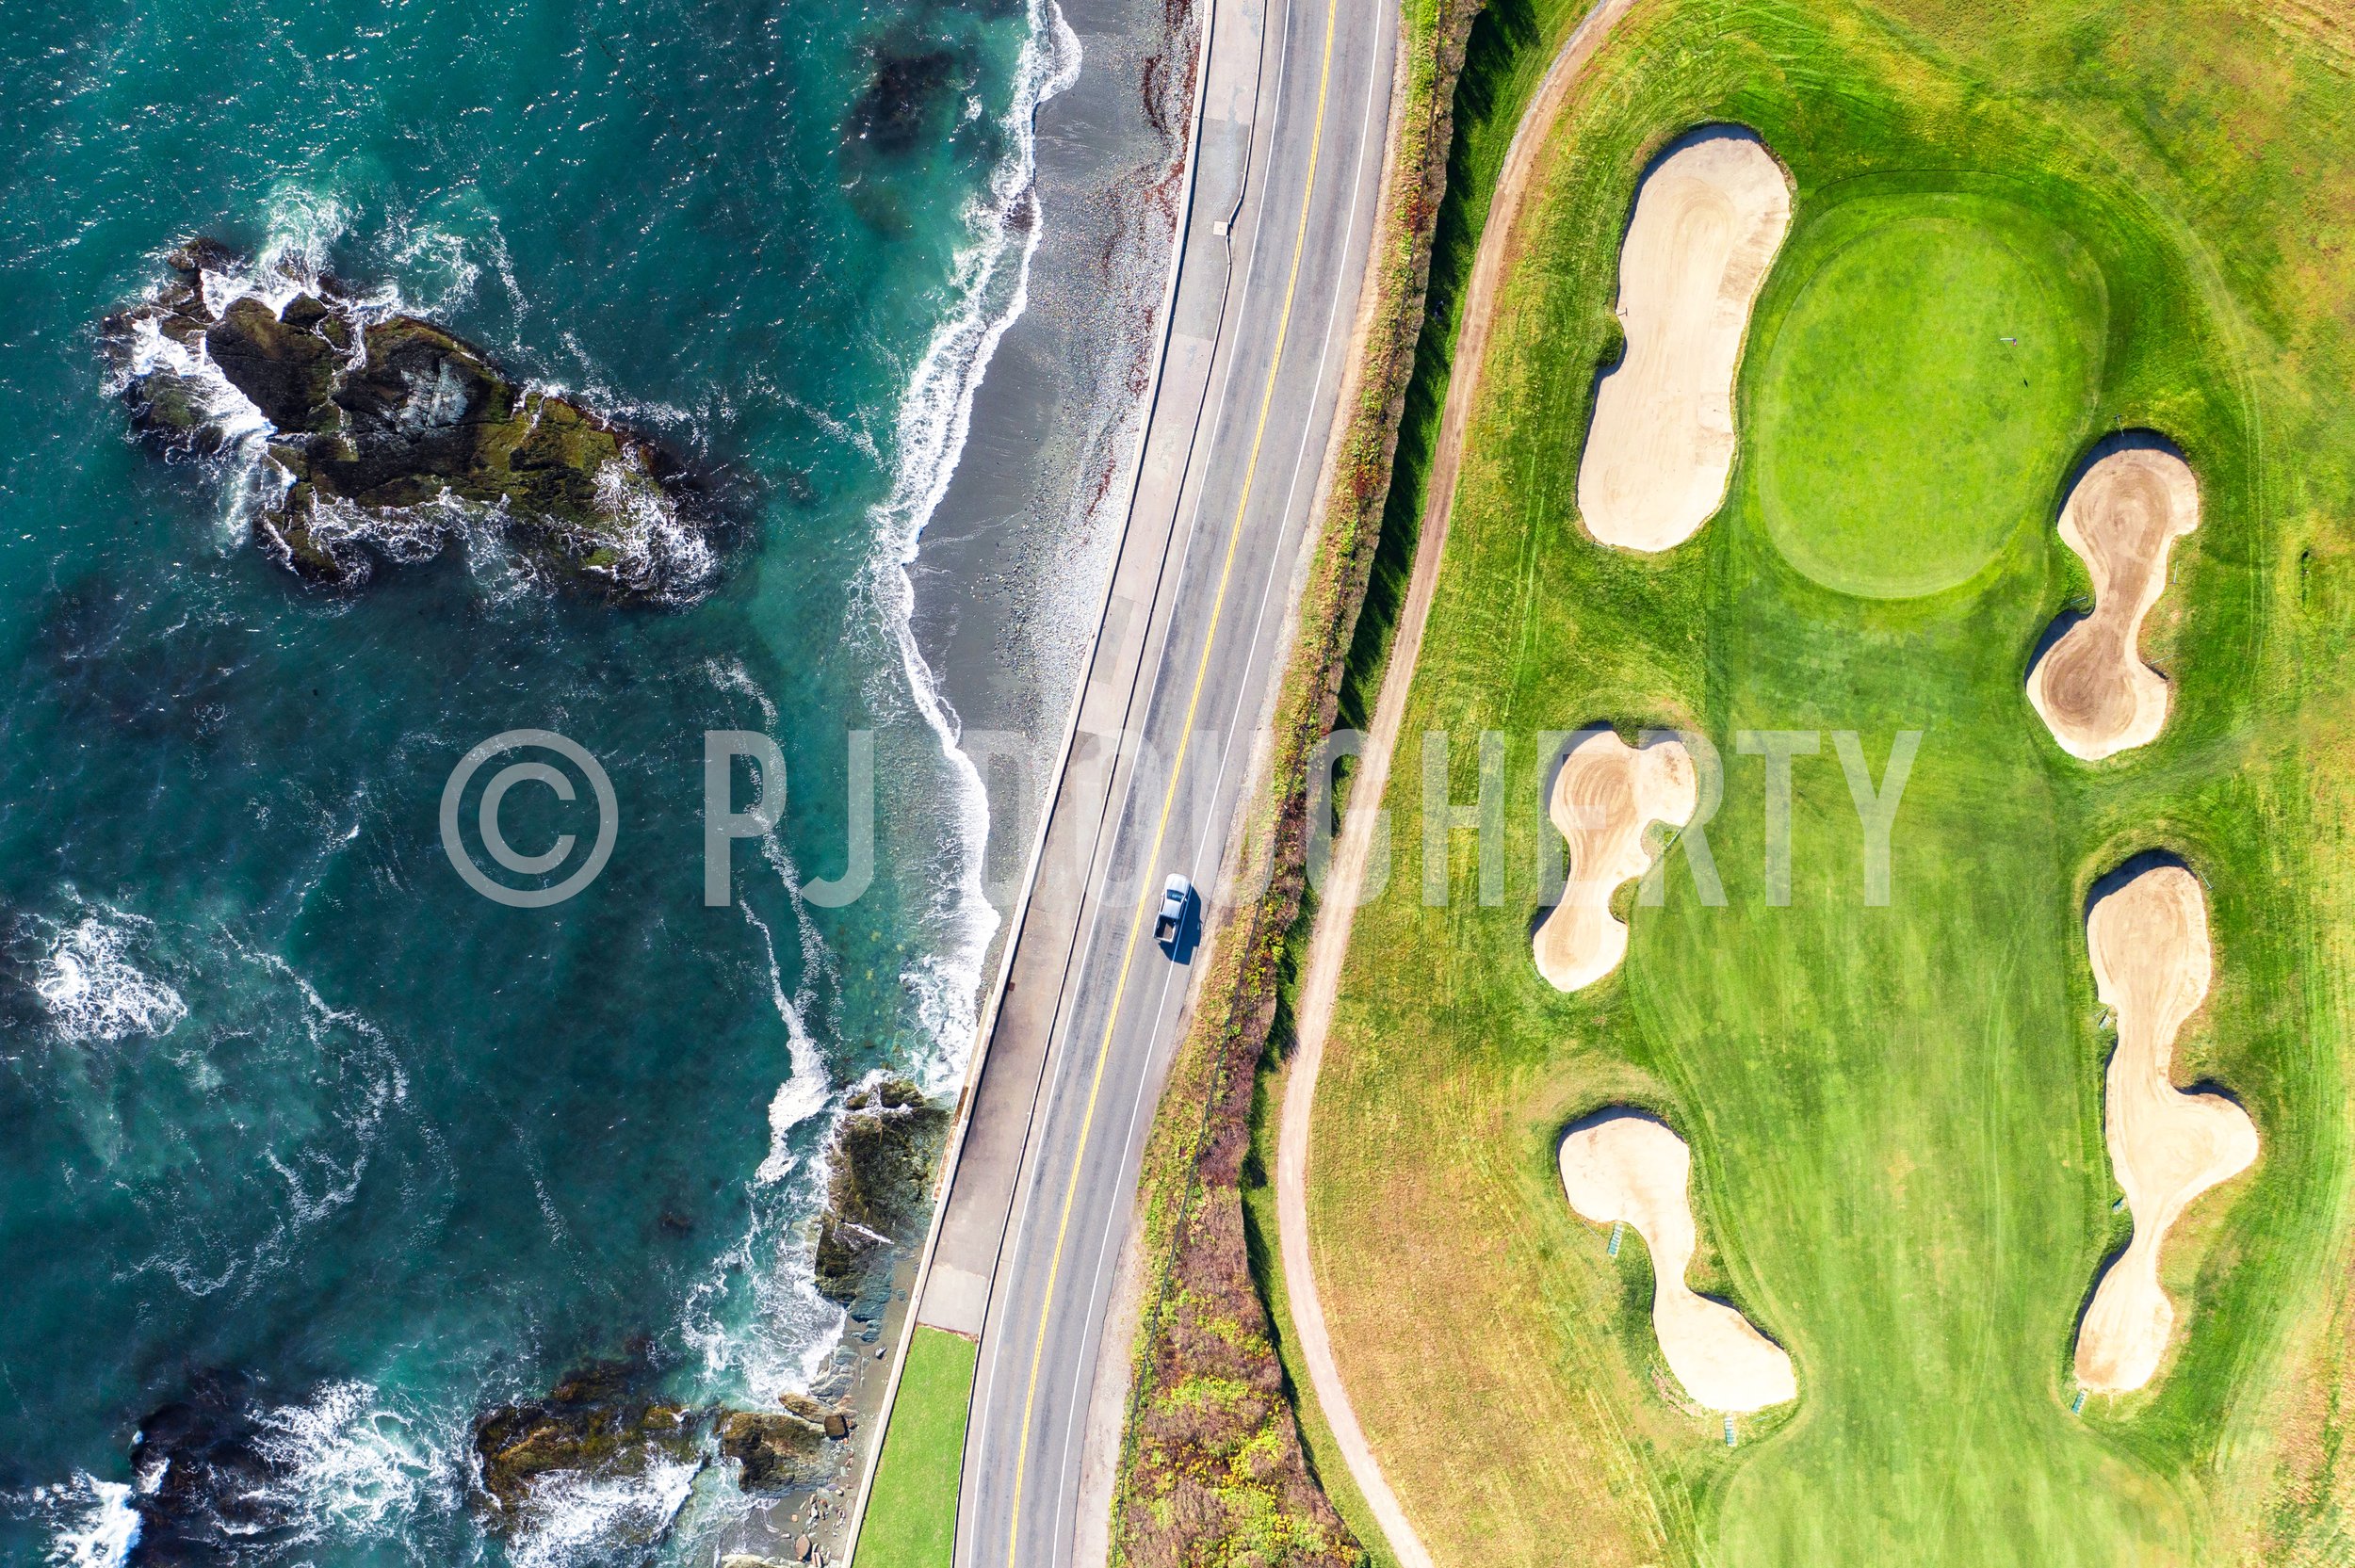 PJD-Newport-2021-Golf-28-Colored-WebsiteUse-Watermarked.jpg